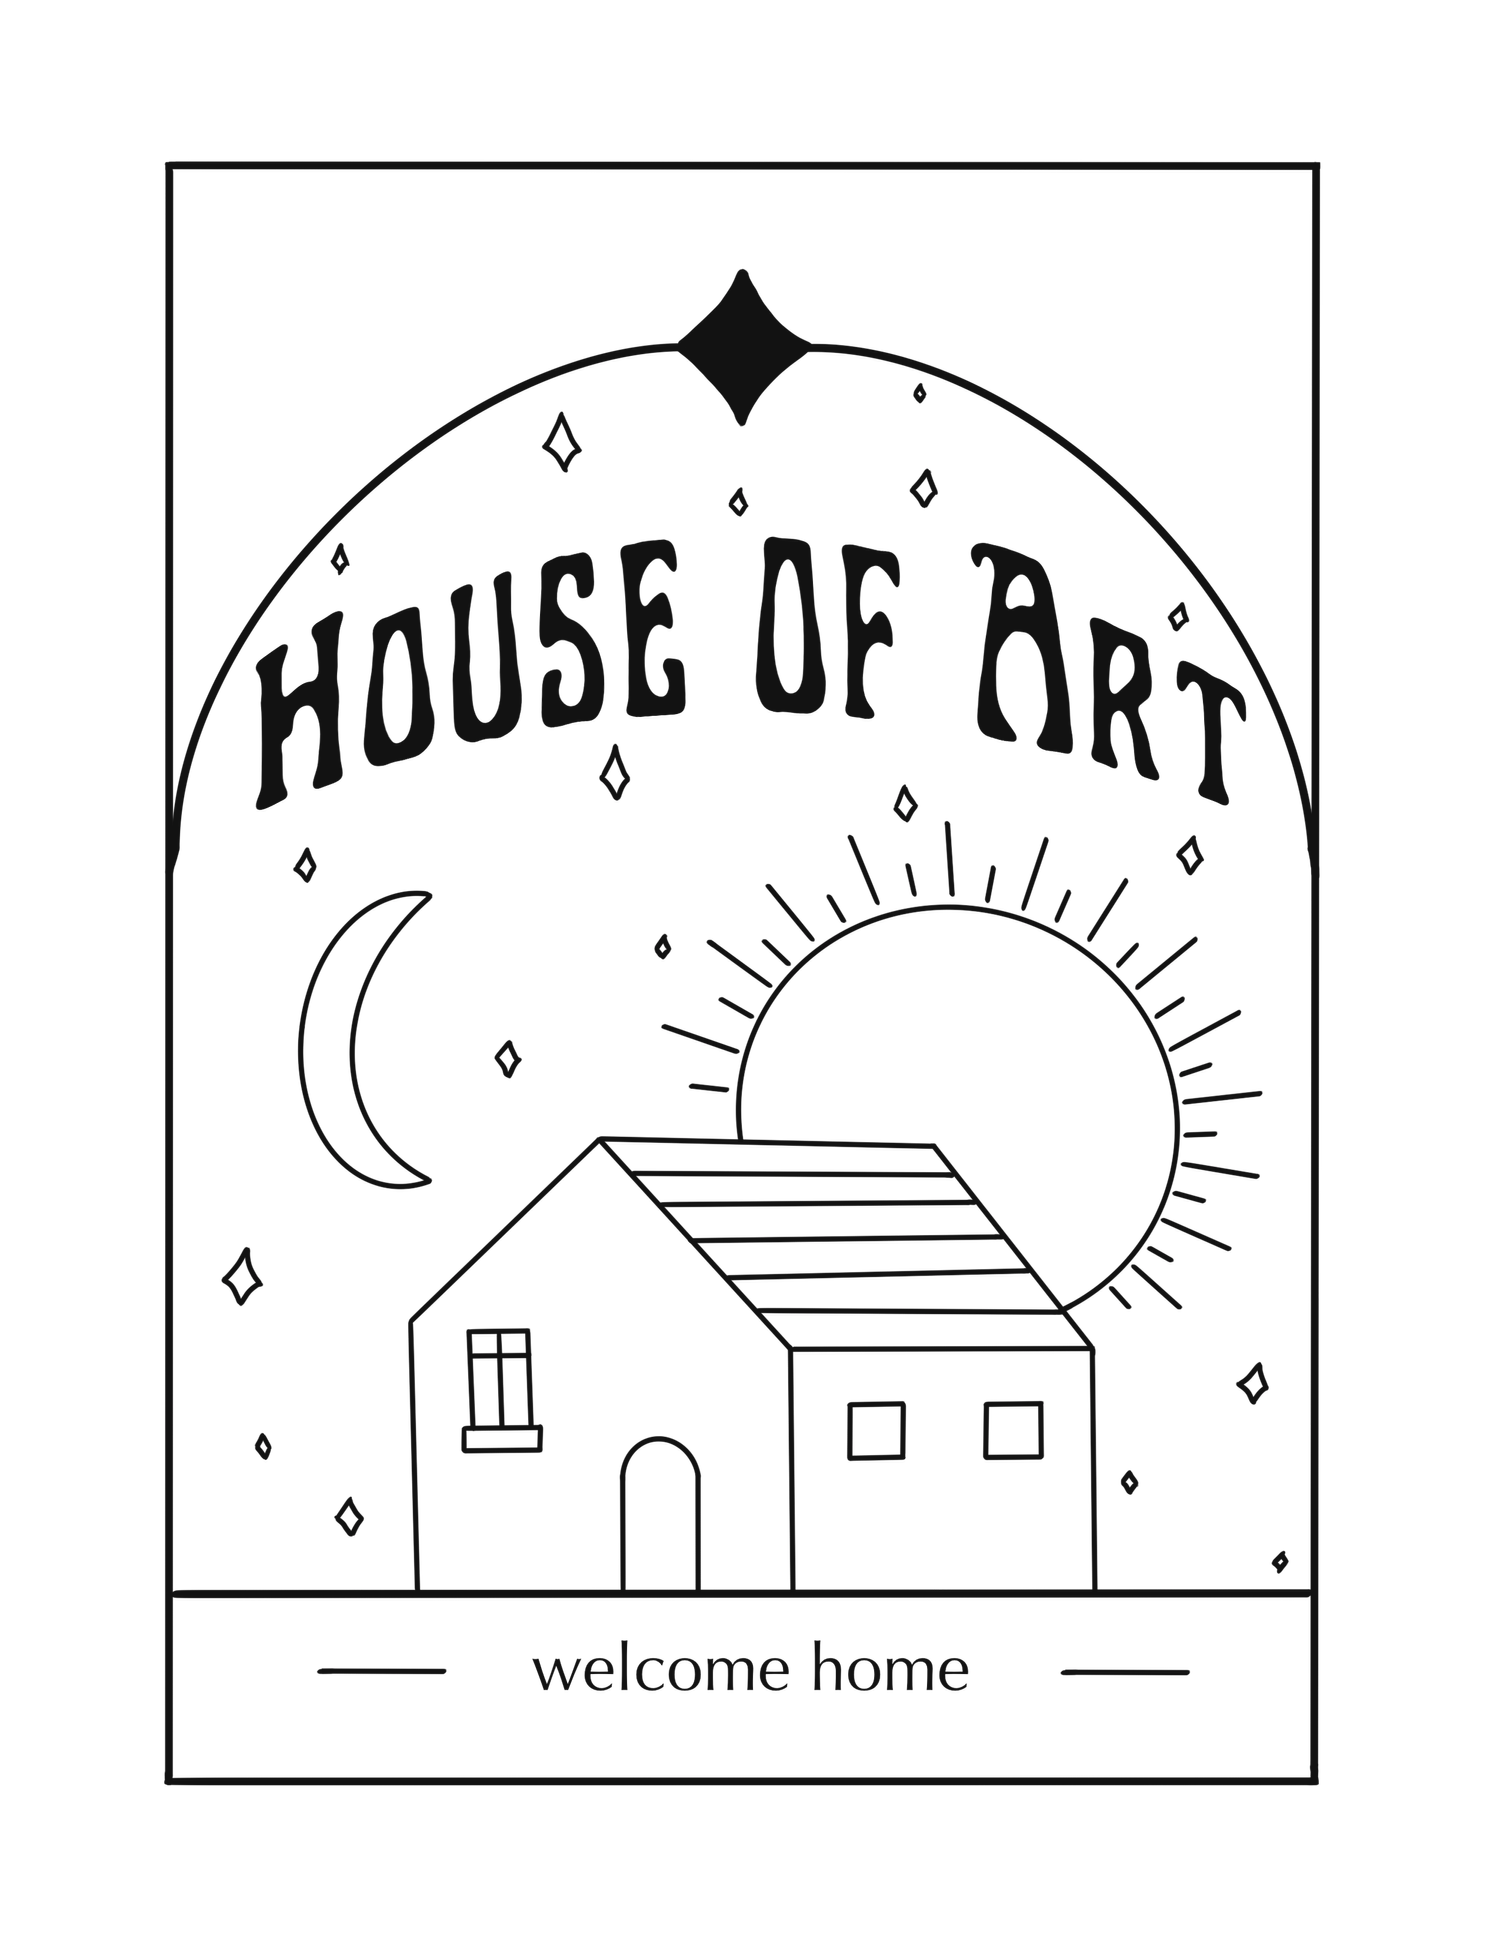 House of Art Co.